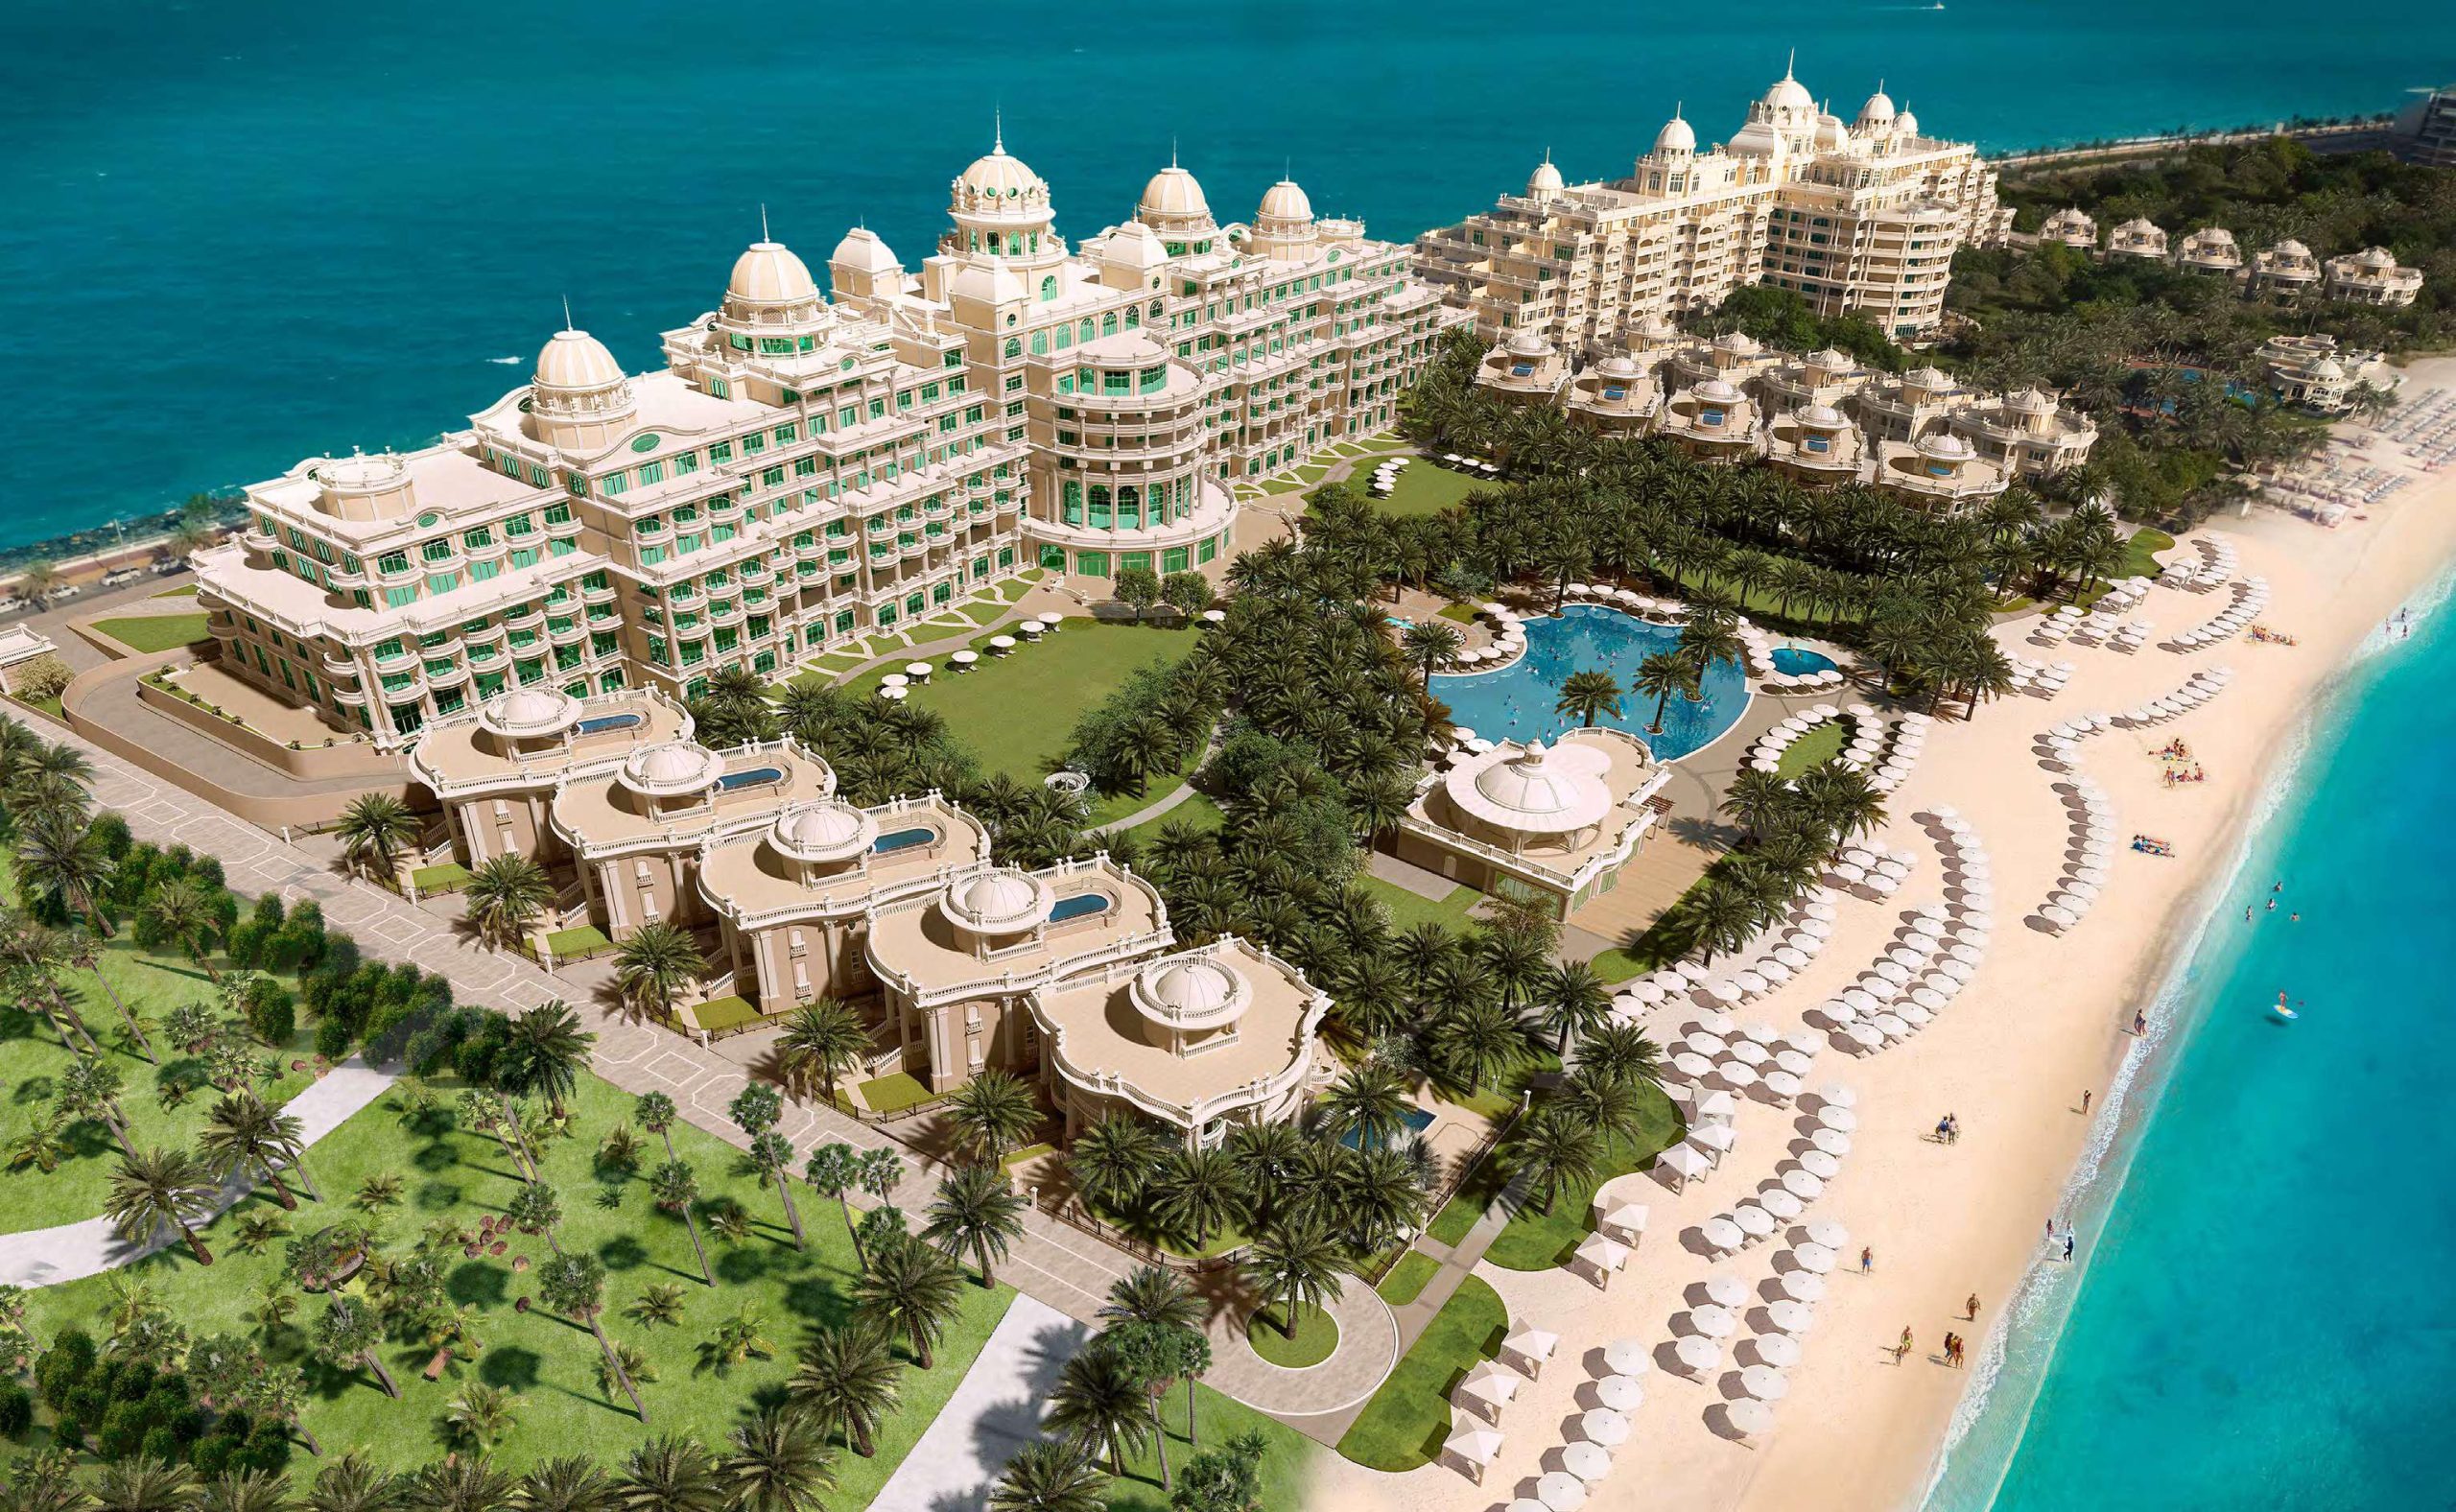 Raffles Residences and Penthouses in Palm Jumeirah, Dubai